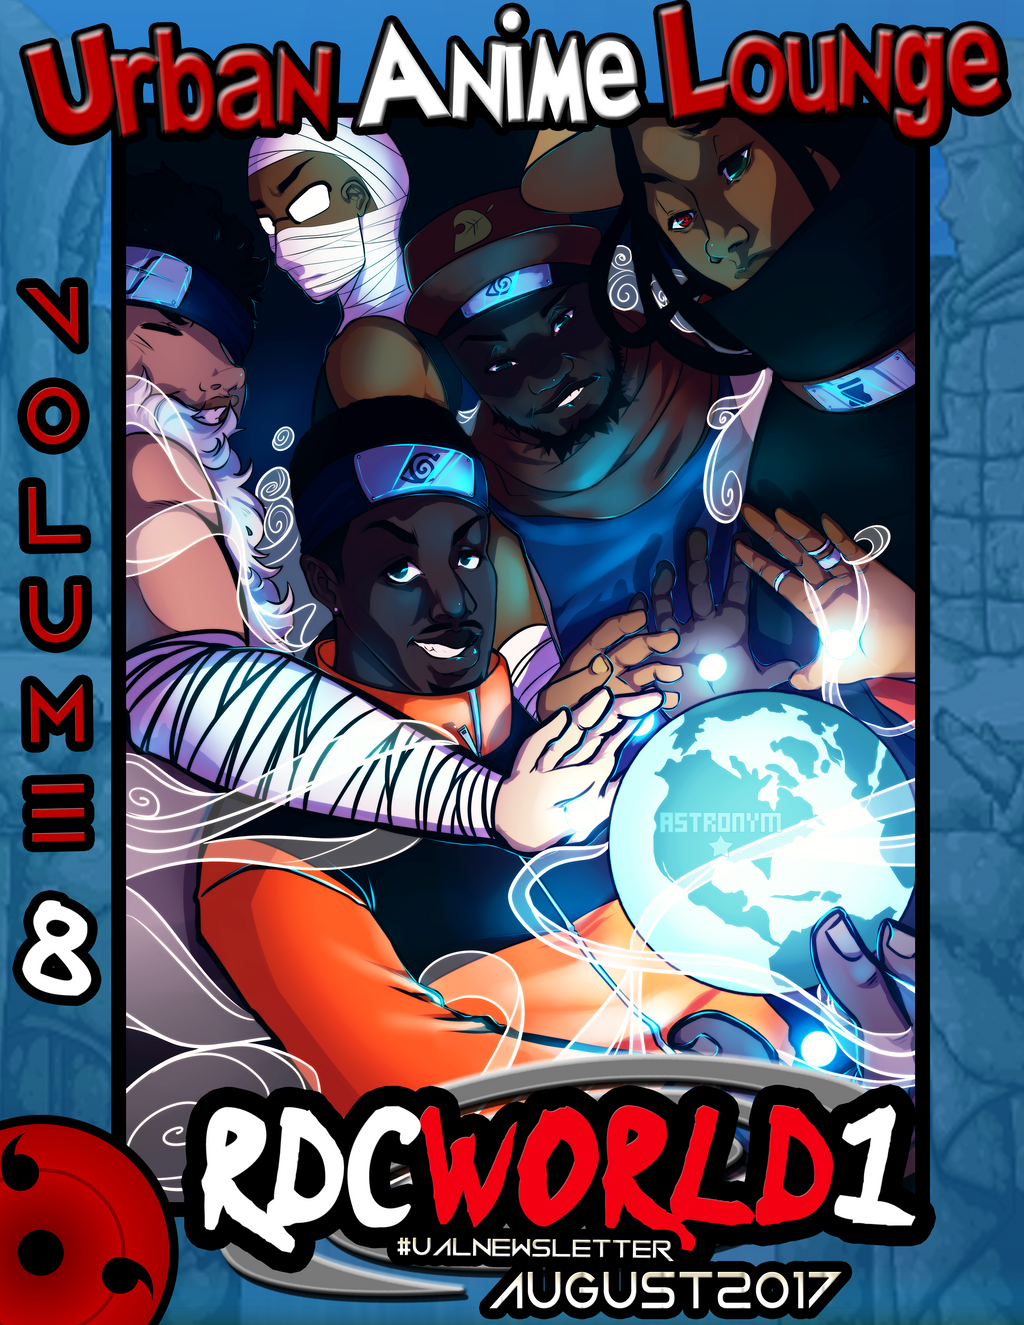 Urban Anime Lounge: Newsletter Volume 8- RDC World 1